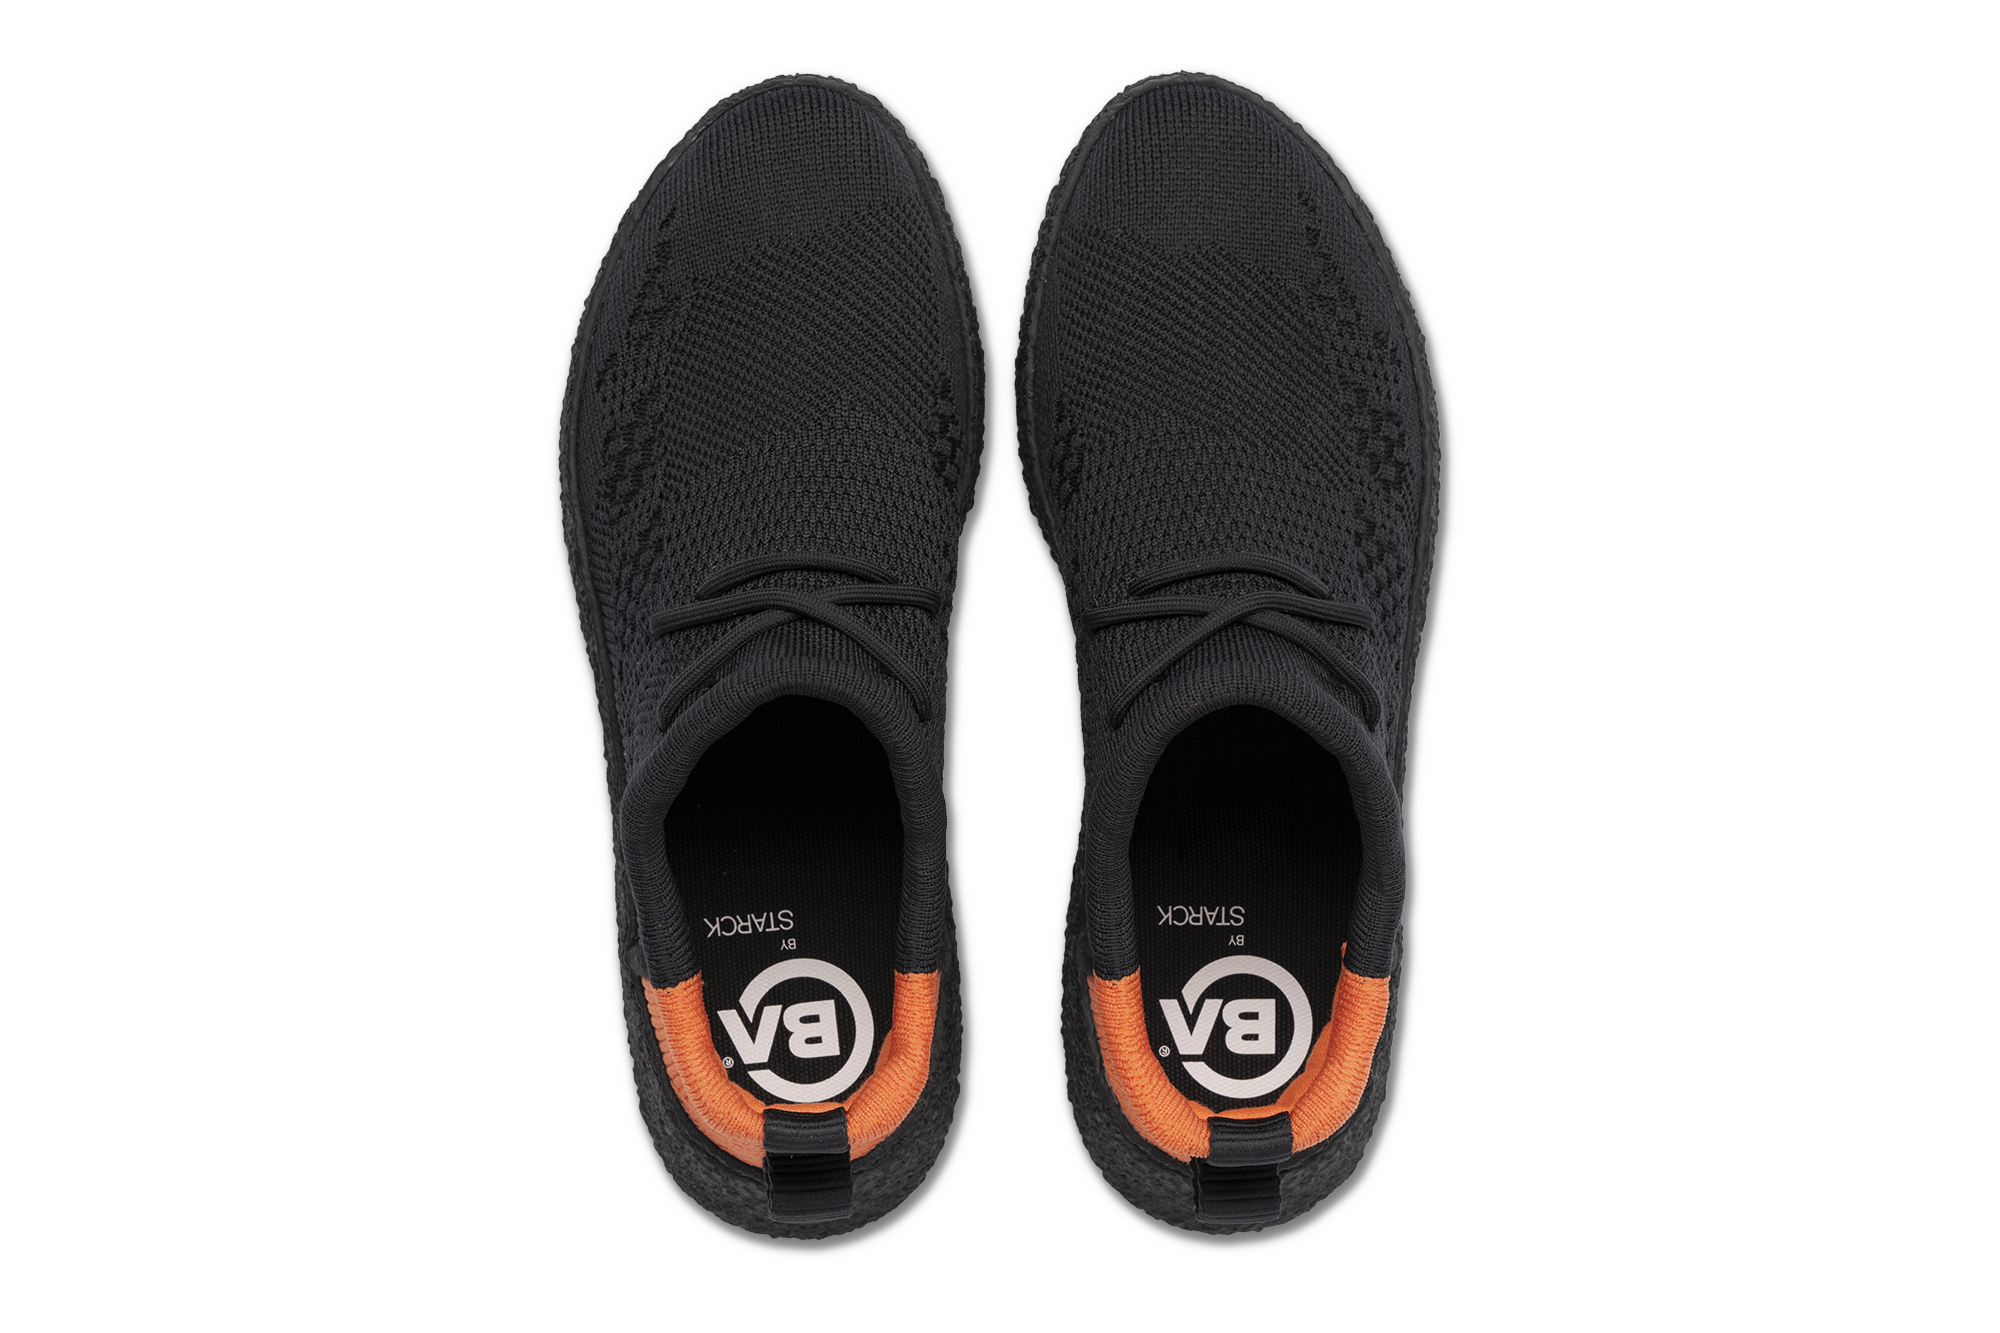 Baliston Smart Shoe Full Black top view both shoes